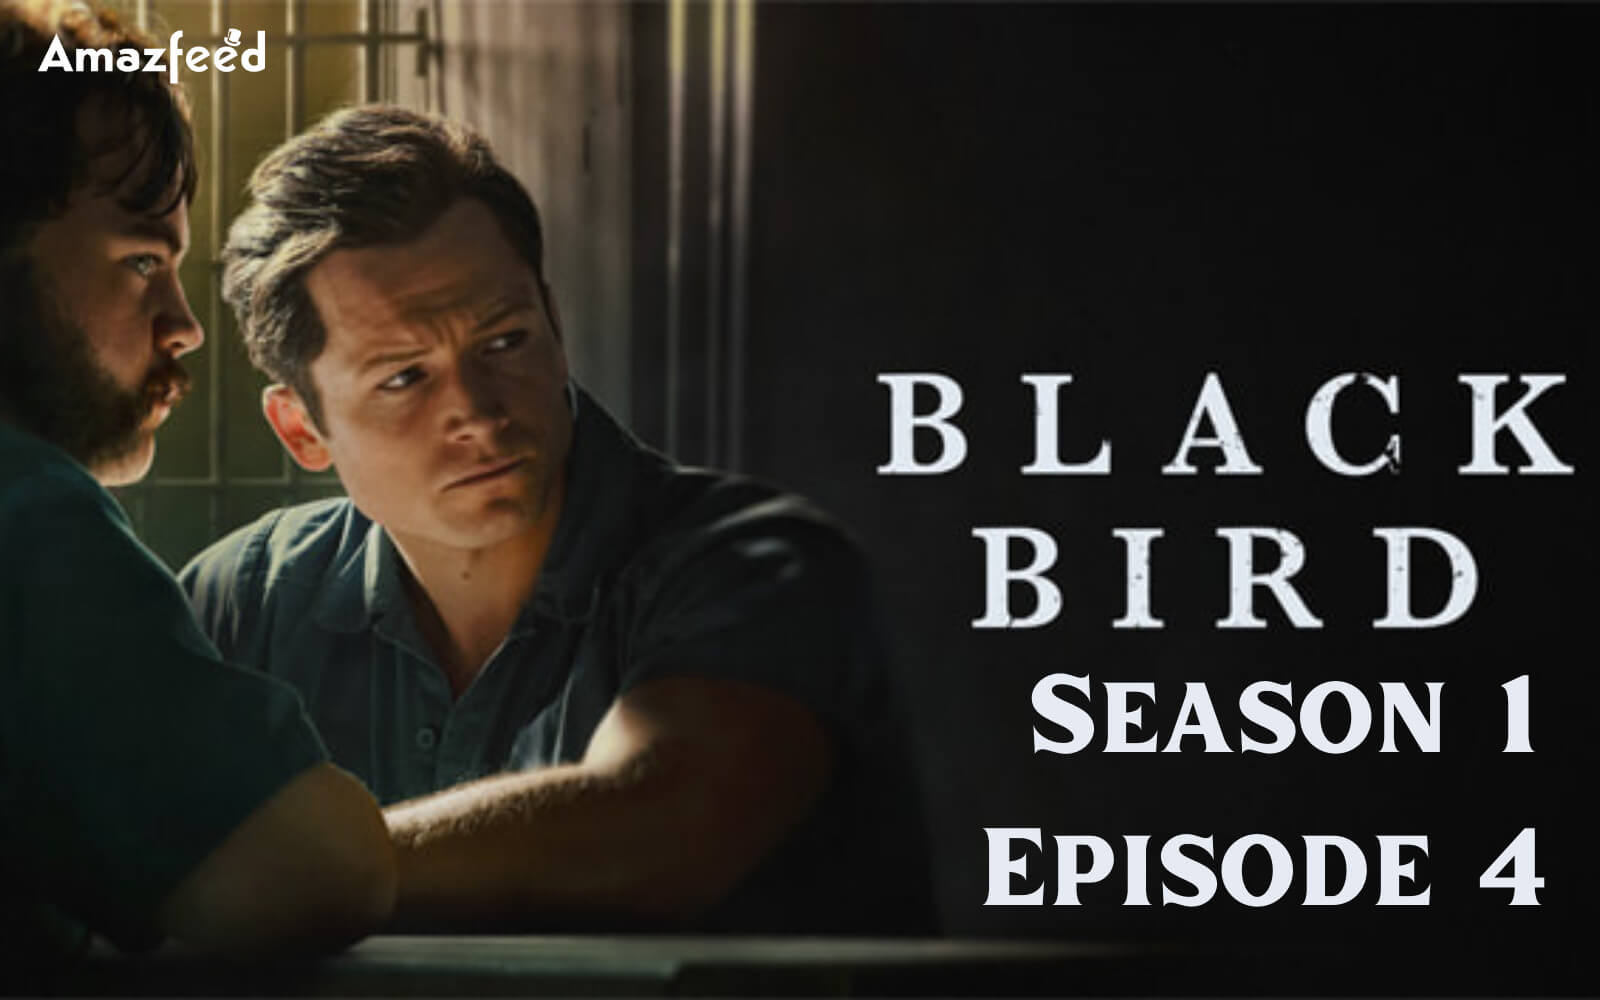 When Is Black Bird Season 1 Episode 4 Coming Out